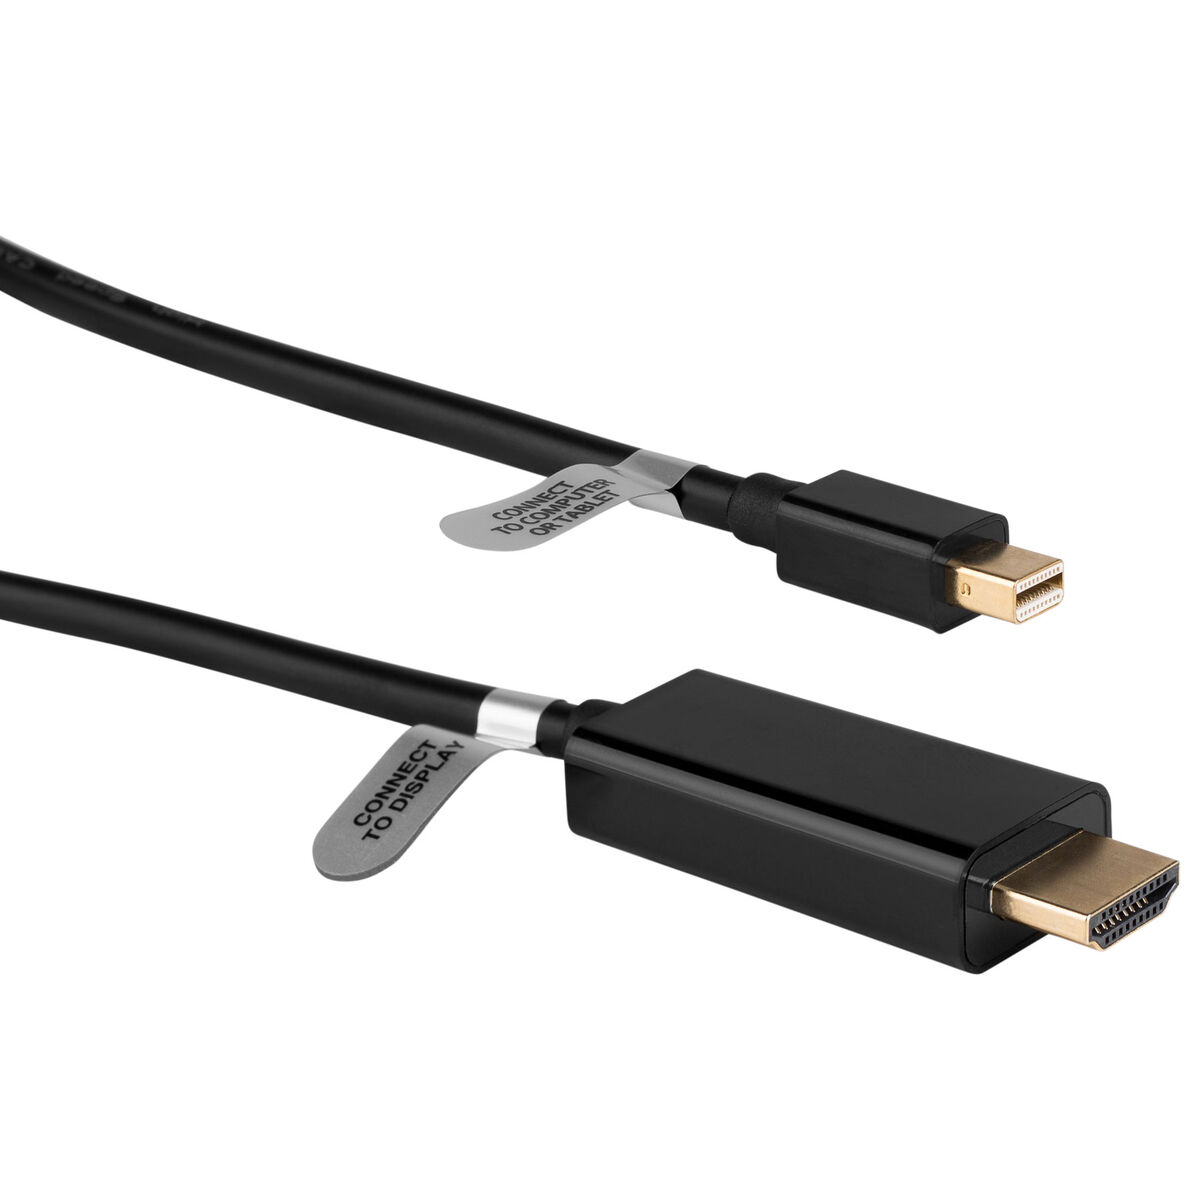 Photos - Cable (video, audio, USB) QVS 3 ft. Mini DisplayPort Thunderbolt to HDMI Digital Video Cable MDPH-03 